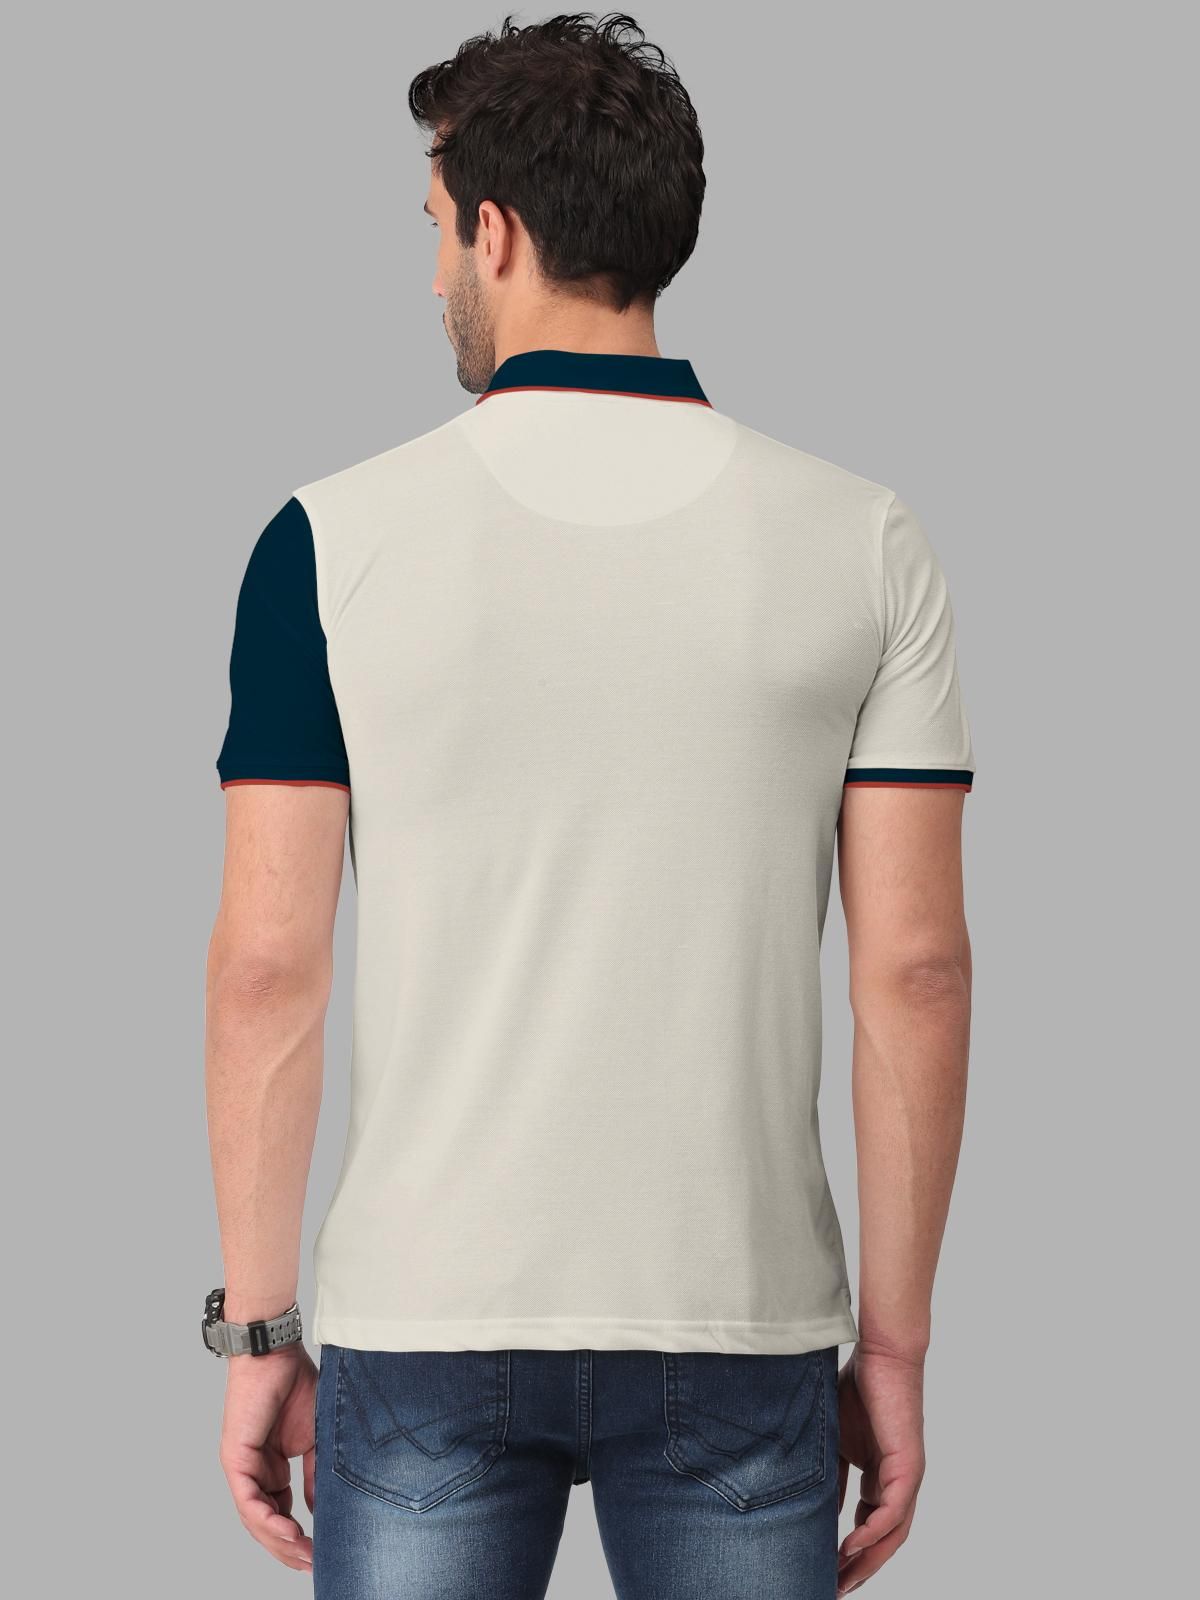 ColorblockHalf Sleeve Polo Collar T-Shirt for Men's